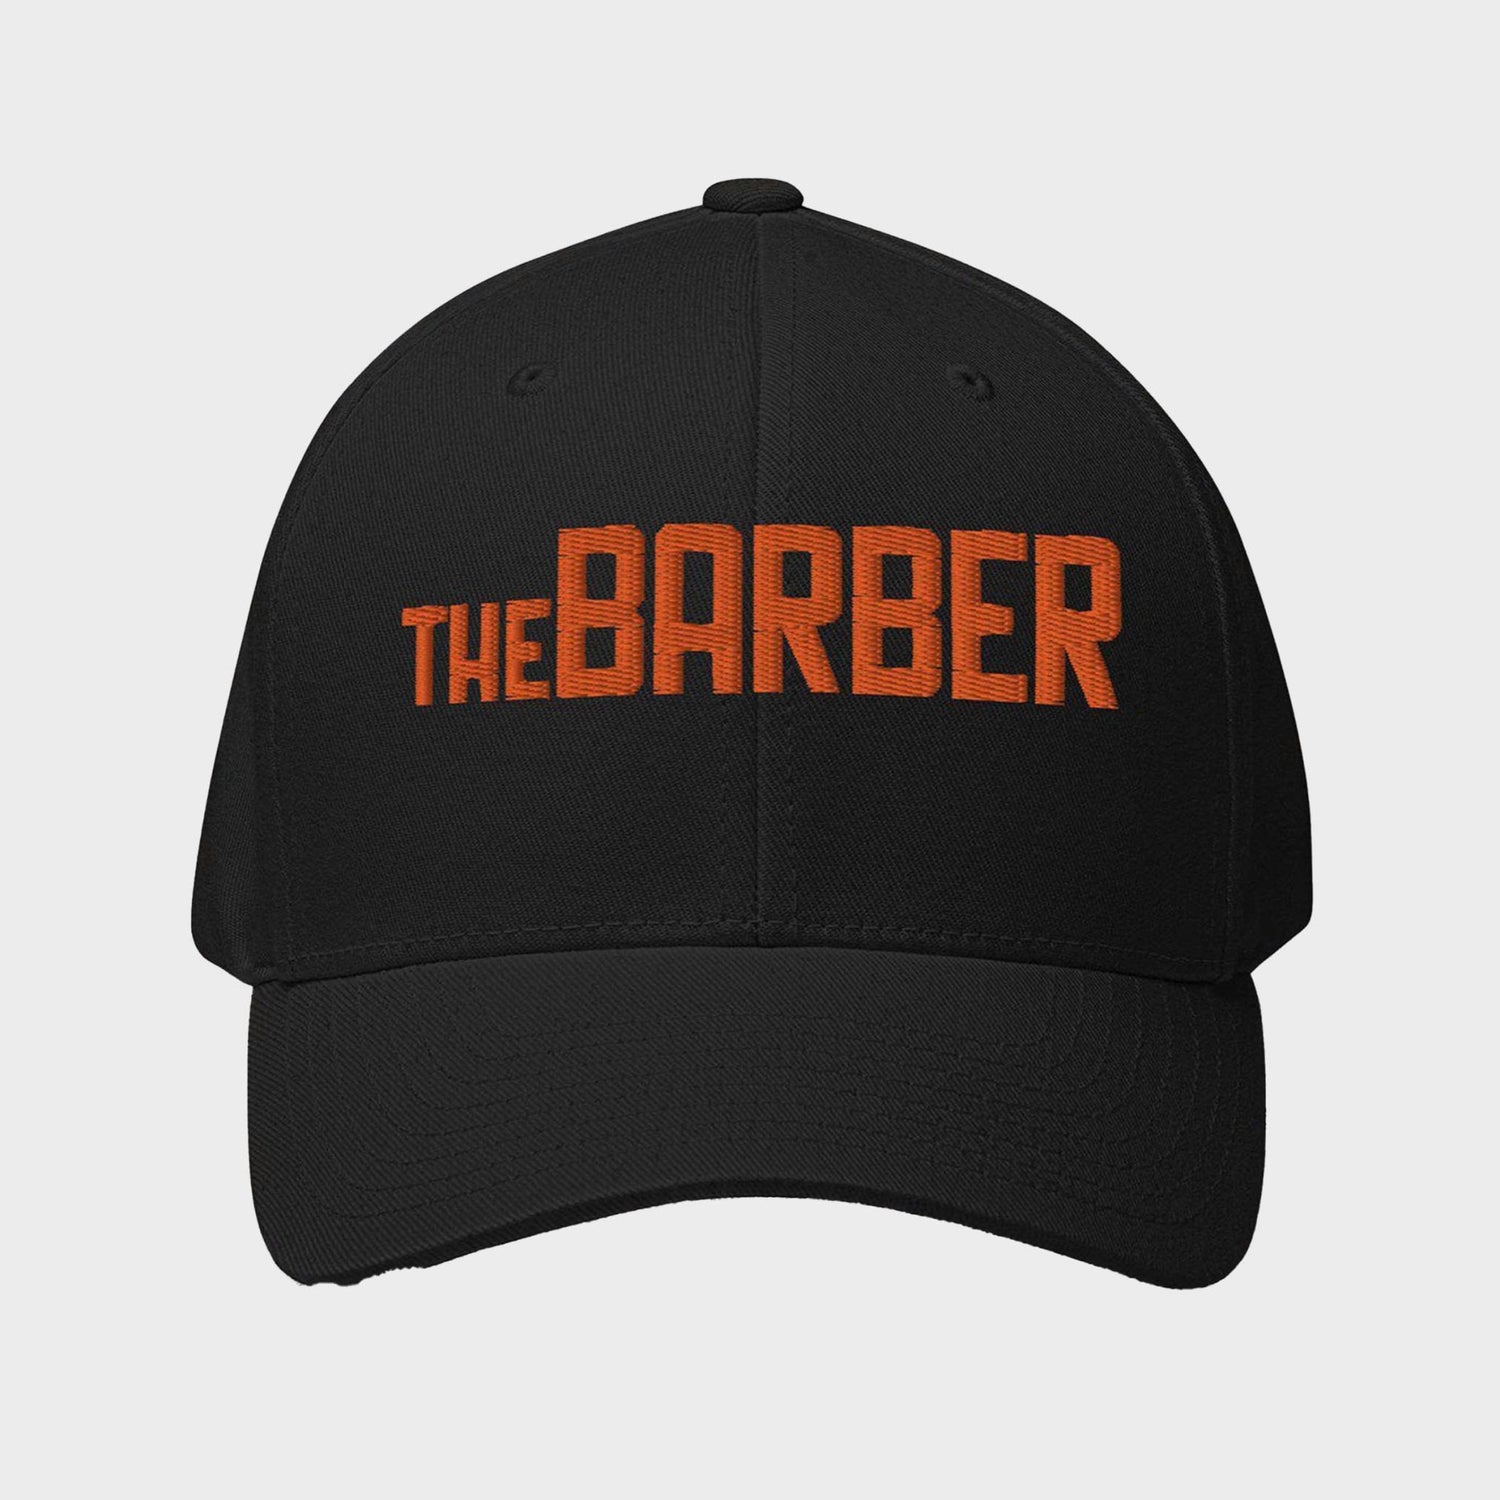 Cap Black/Orange - The Barber Style